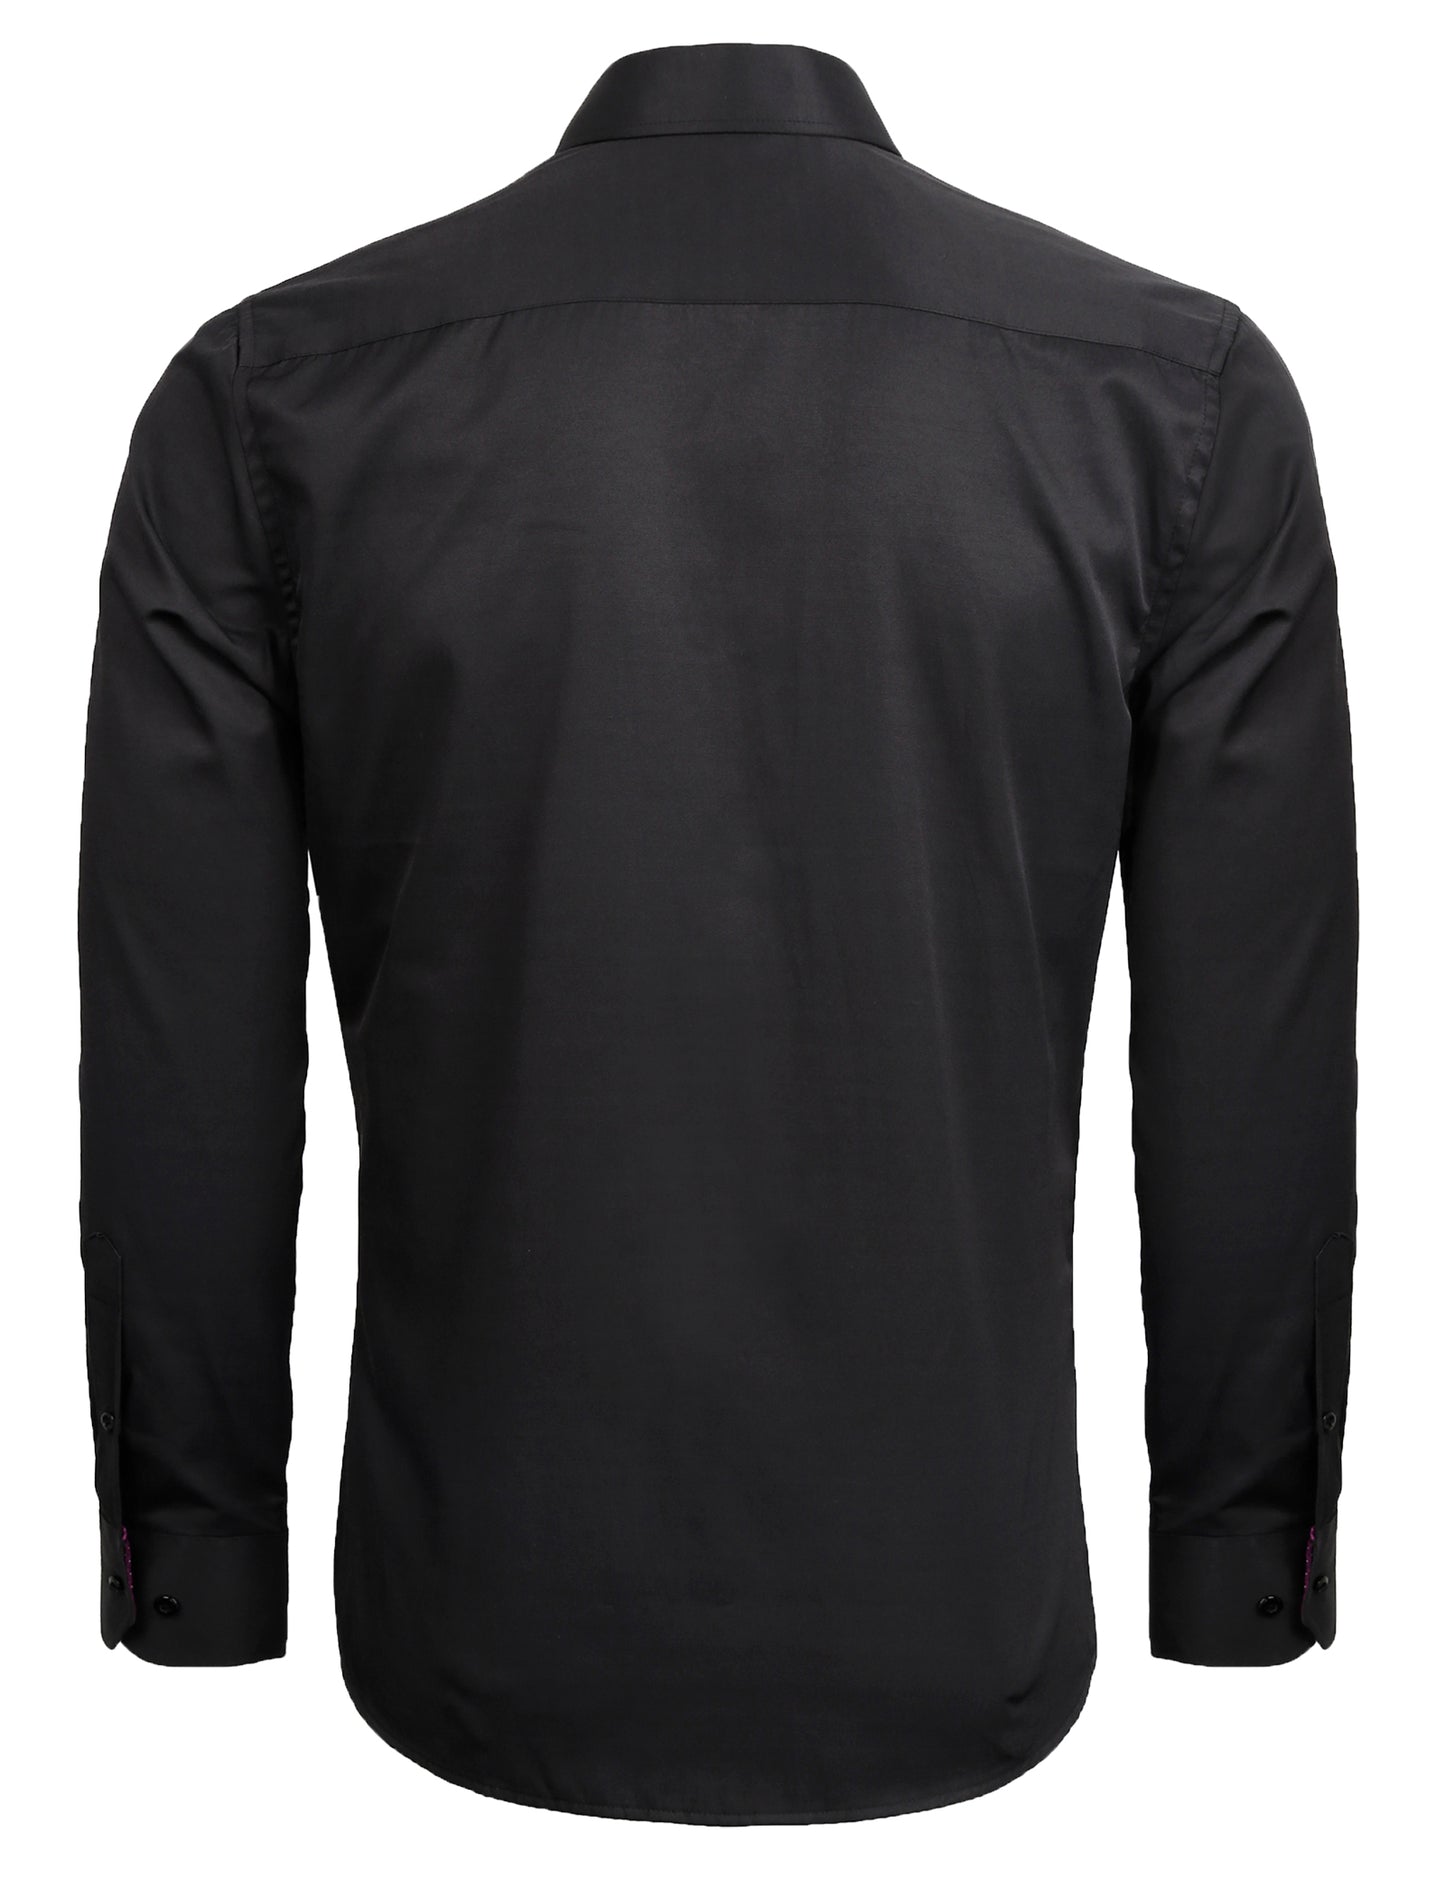 Men's Long Sleeve Dress Shirts Polka Dot Patchwork Button Down Formal Shirts, 116-Black+Plum Dots